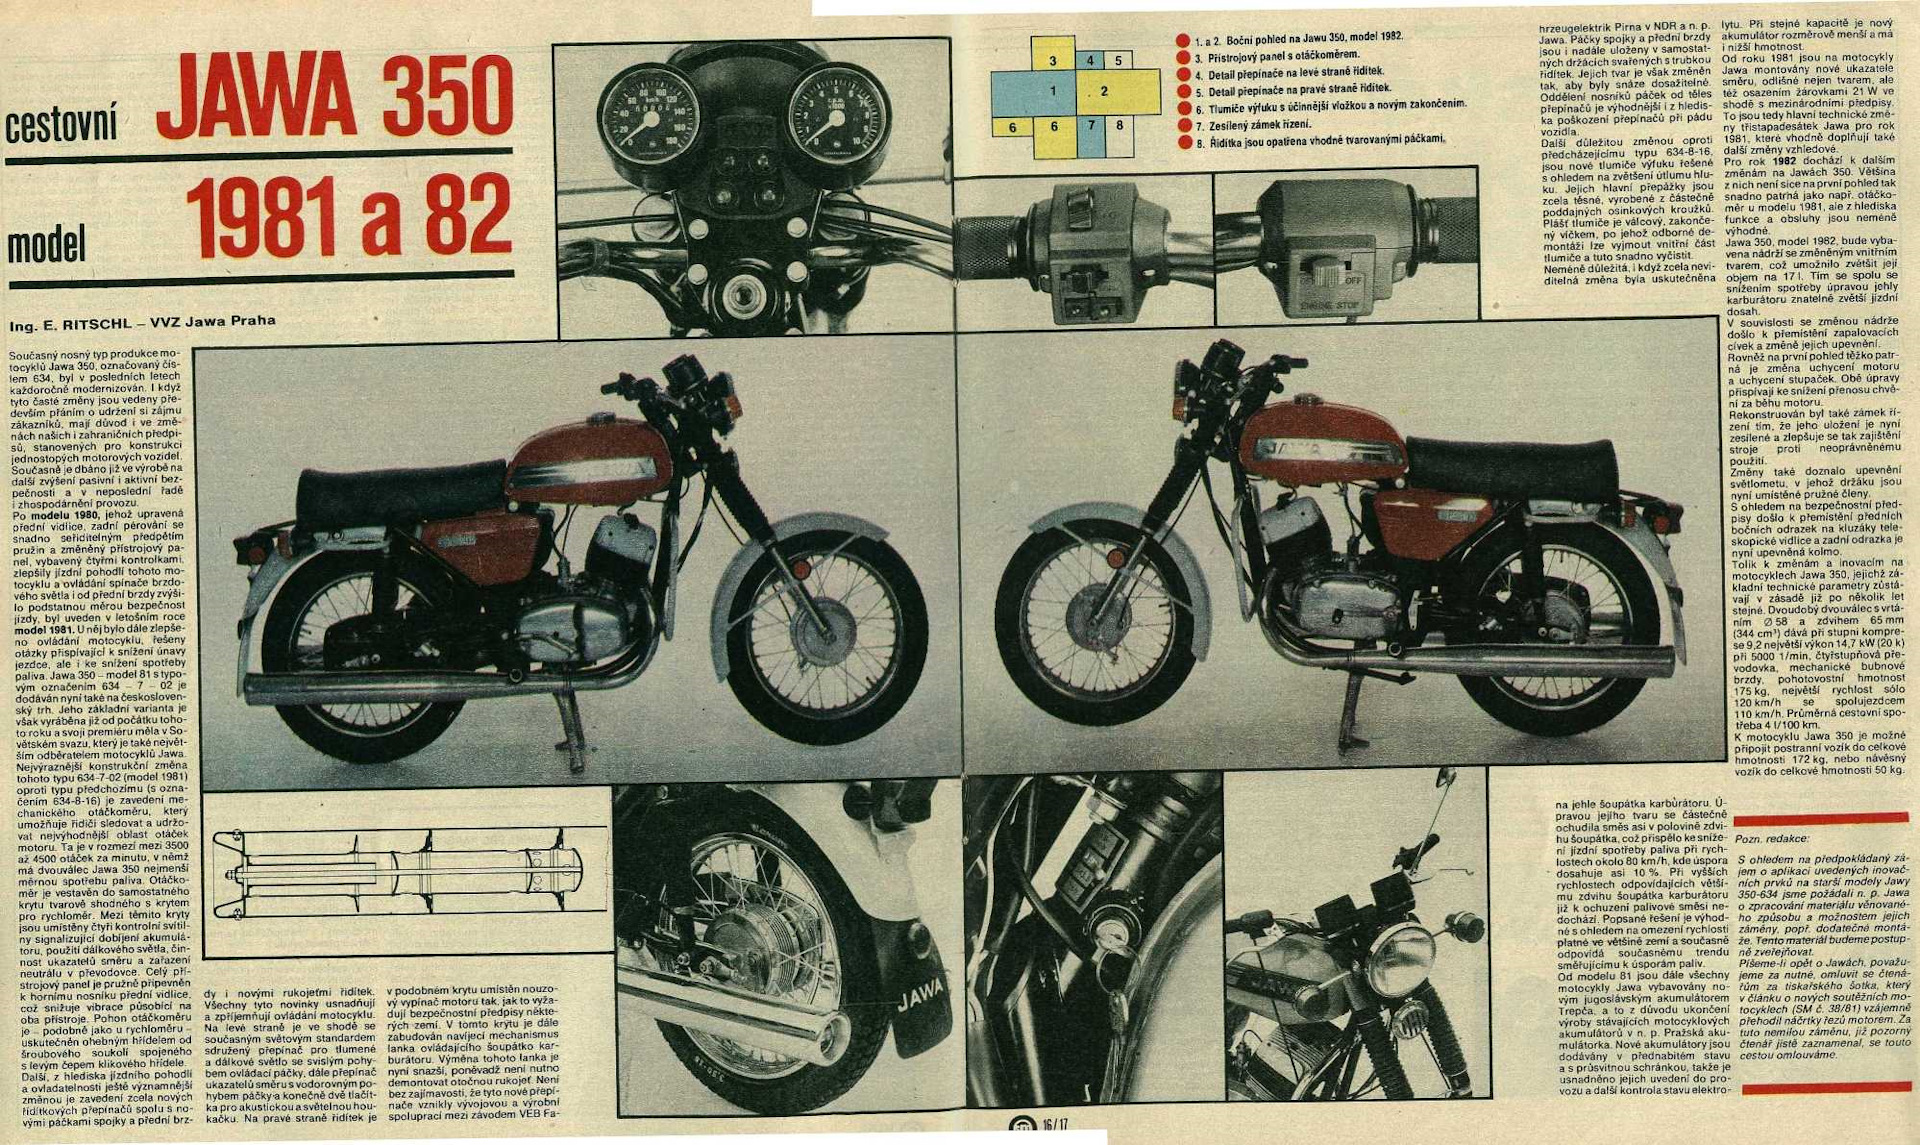 Мотоцикл jawa 350 1970 - изучаем суть